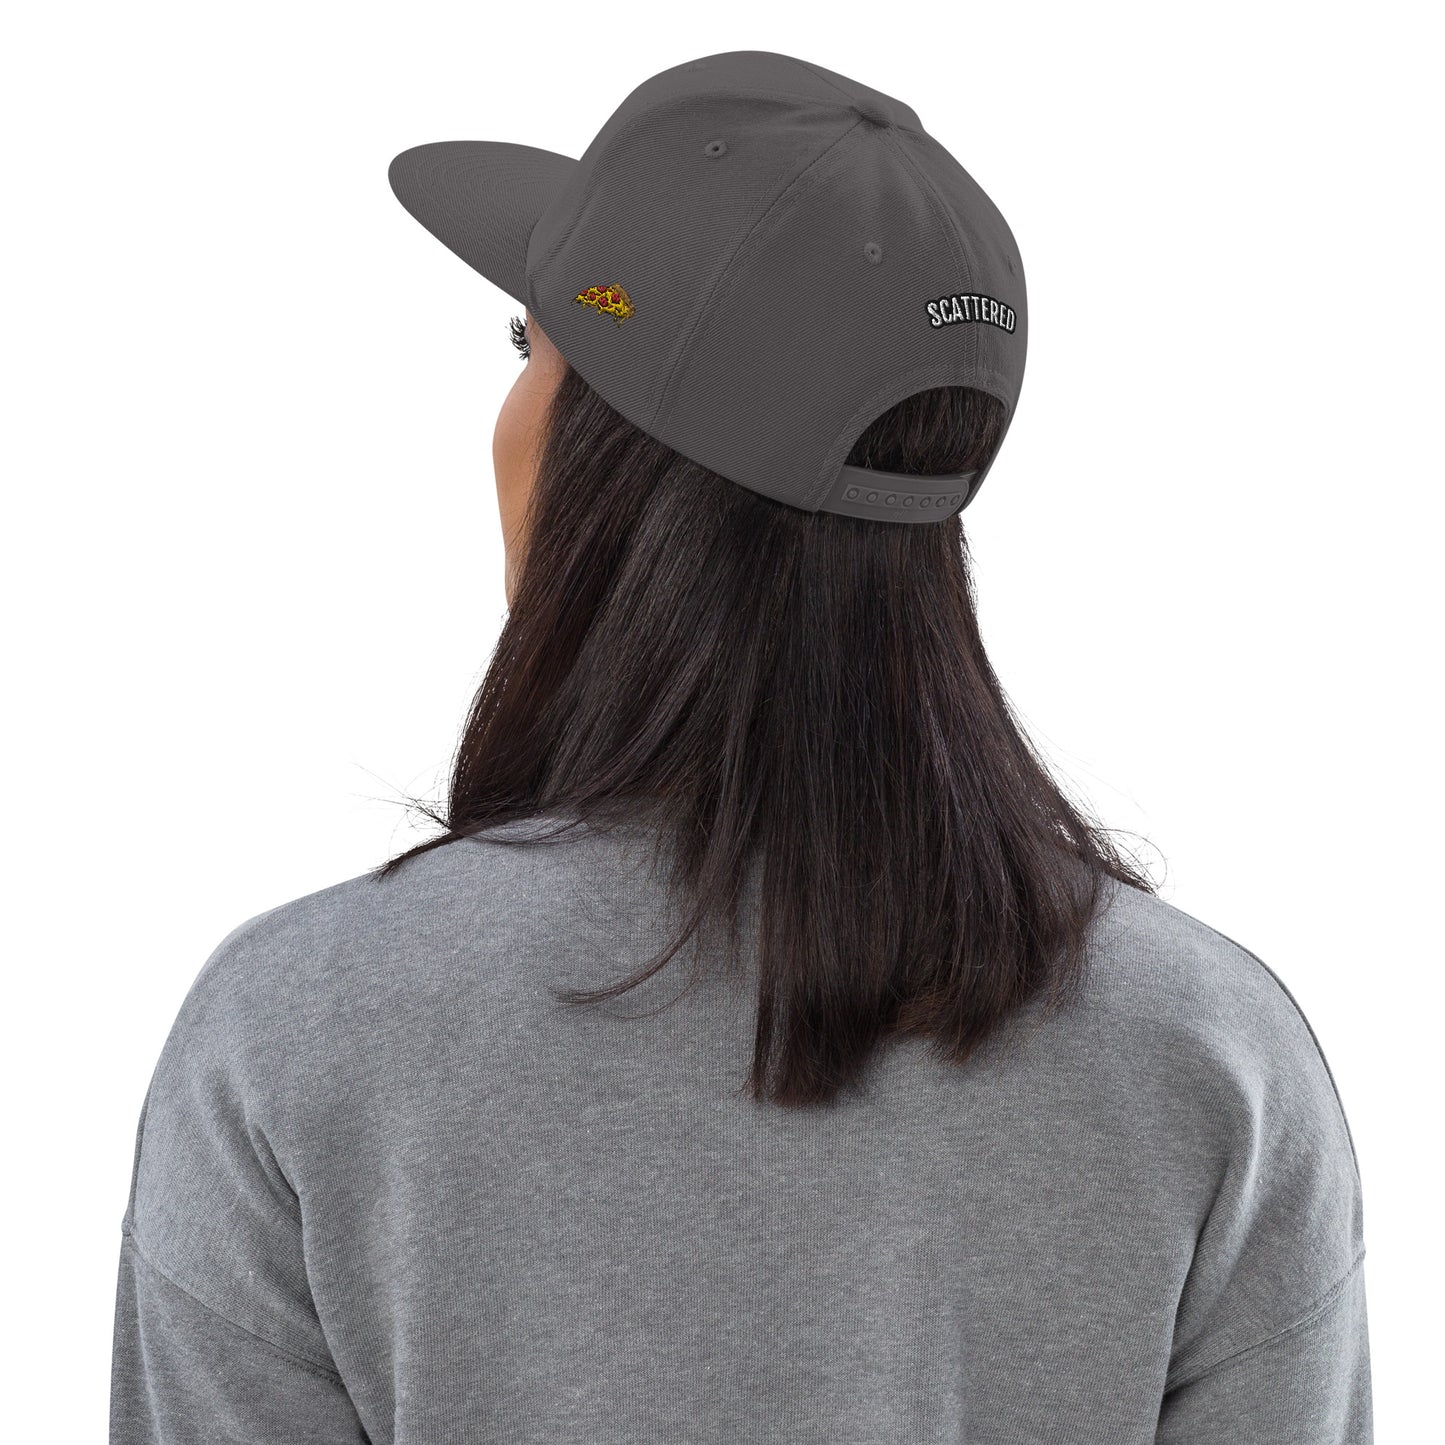 New York Apple Logo Embroidered Dark Grey Snapback Hat (Pizza) Scattered Streetwear